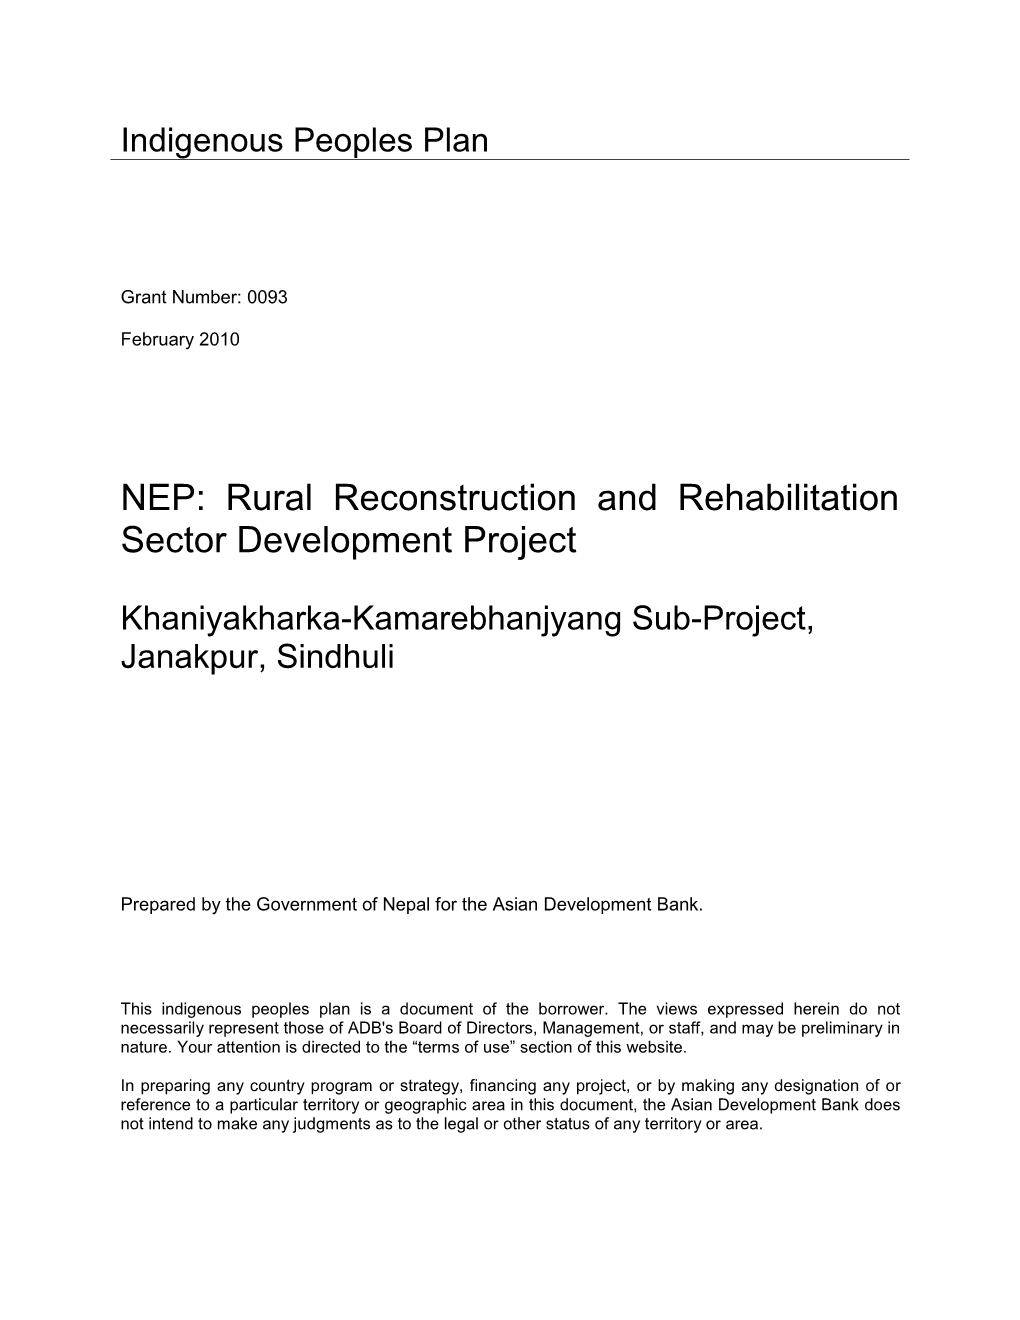 40554-022: Rural Reconstruction and Rehabilitation Sector Development